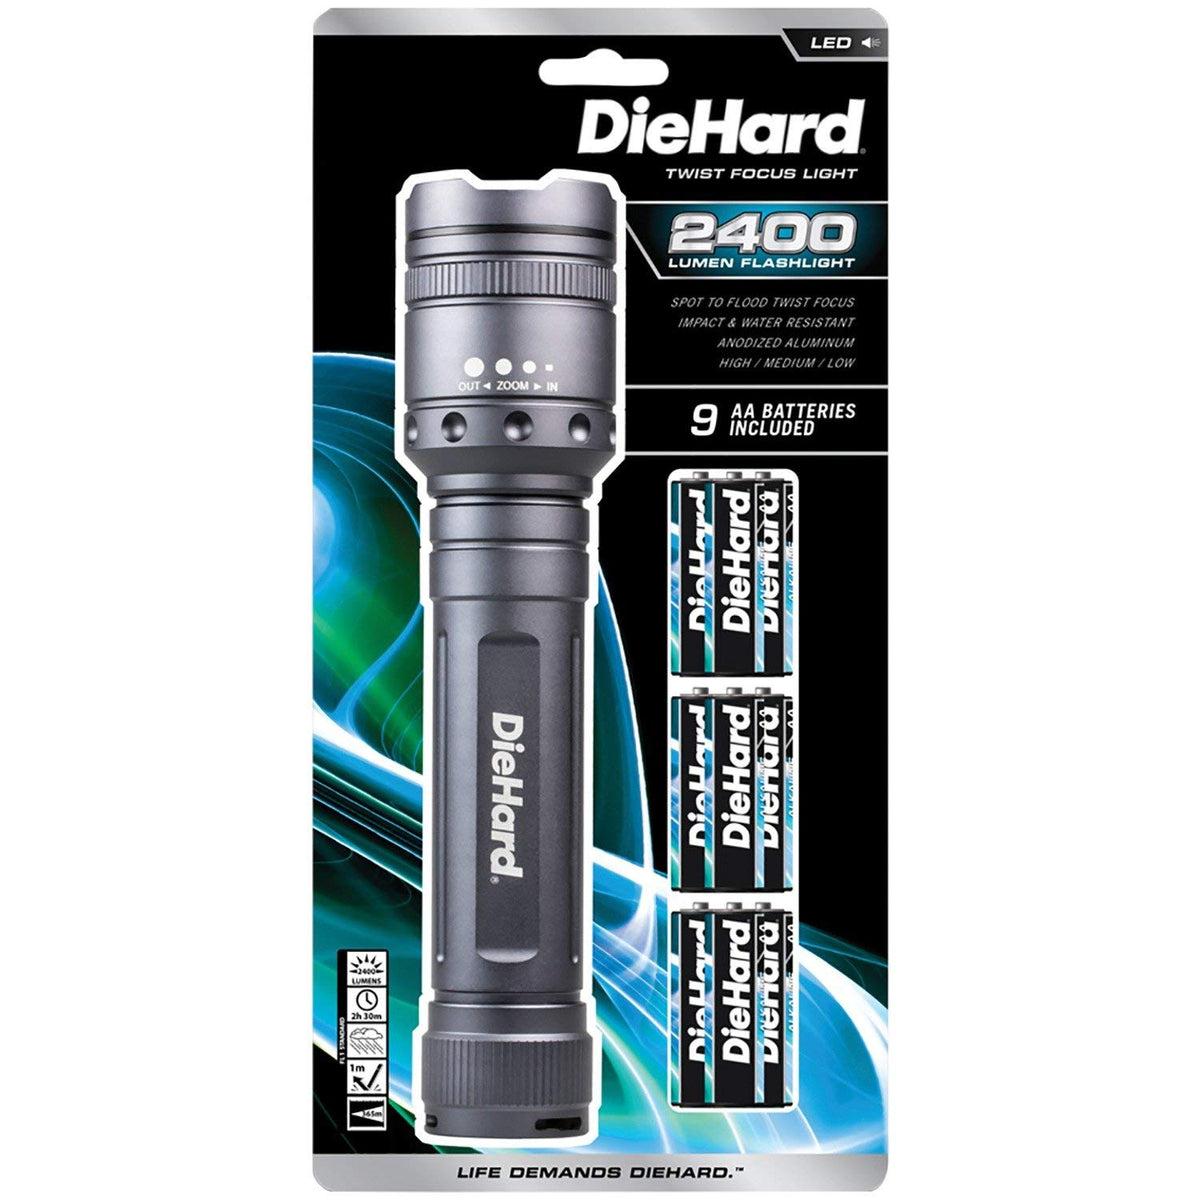 DieHard 41-6124 Twist Focus Flashlight, Grey, 2,400 Lumens